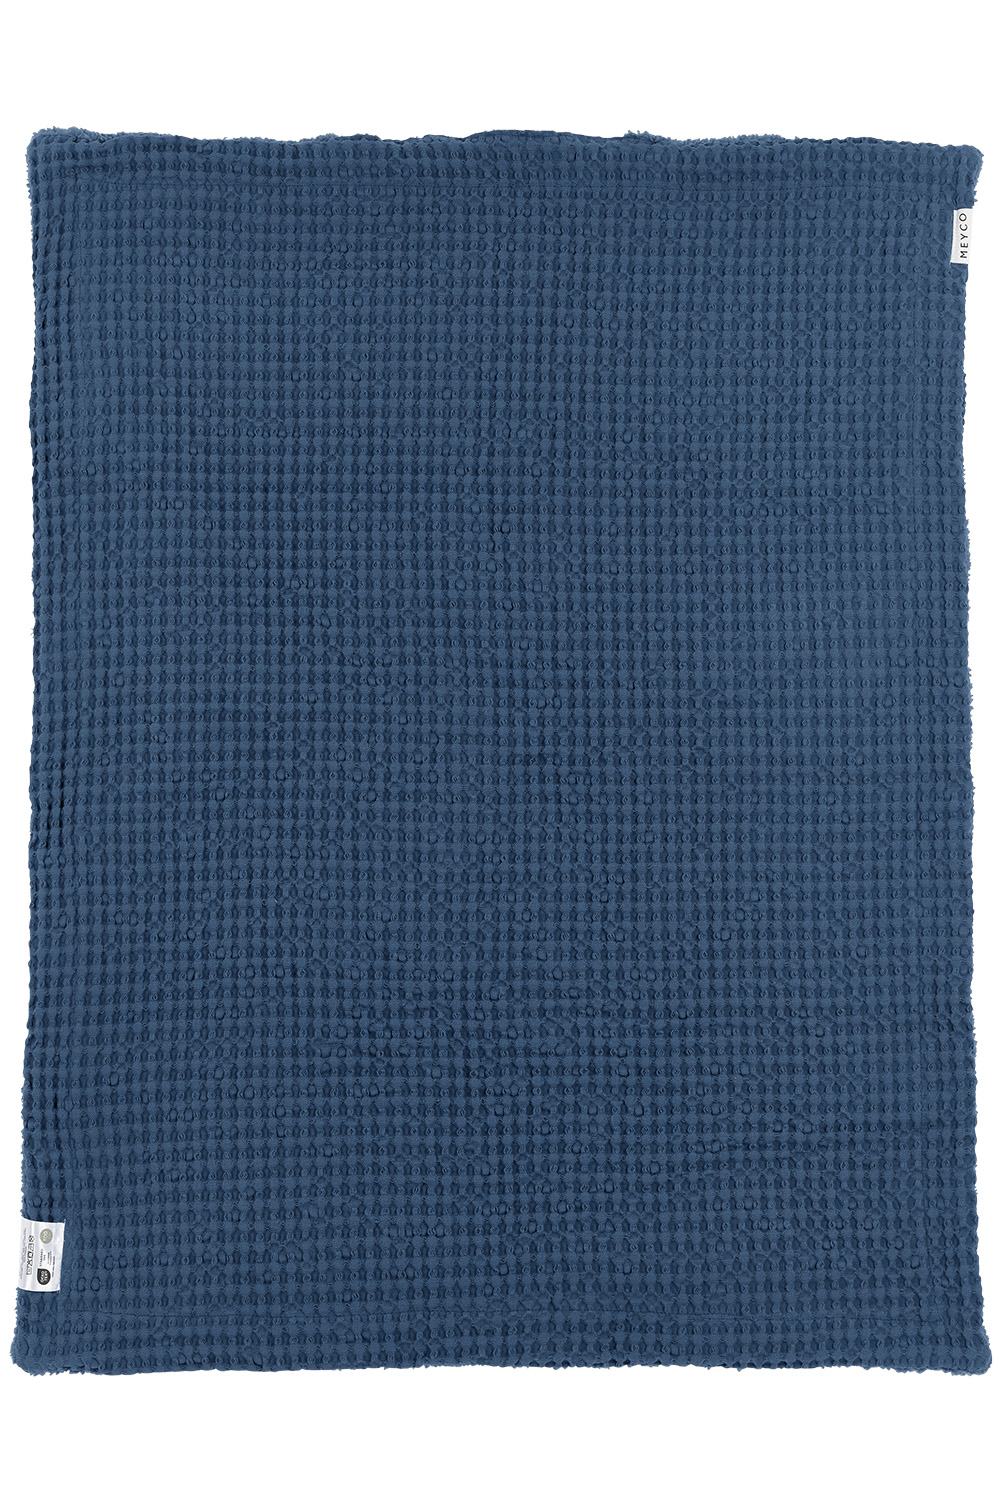 Ledikant deken Wafel Teddy - indigo - 100x150cm